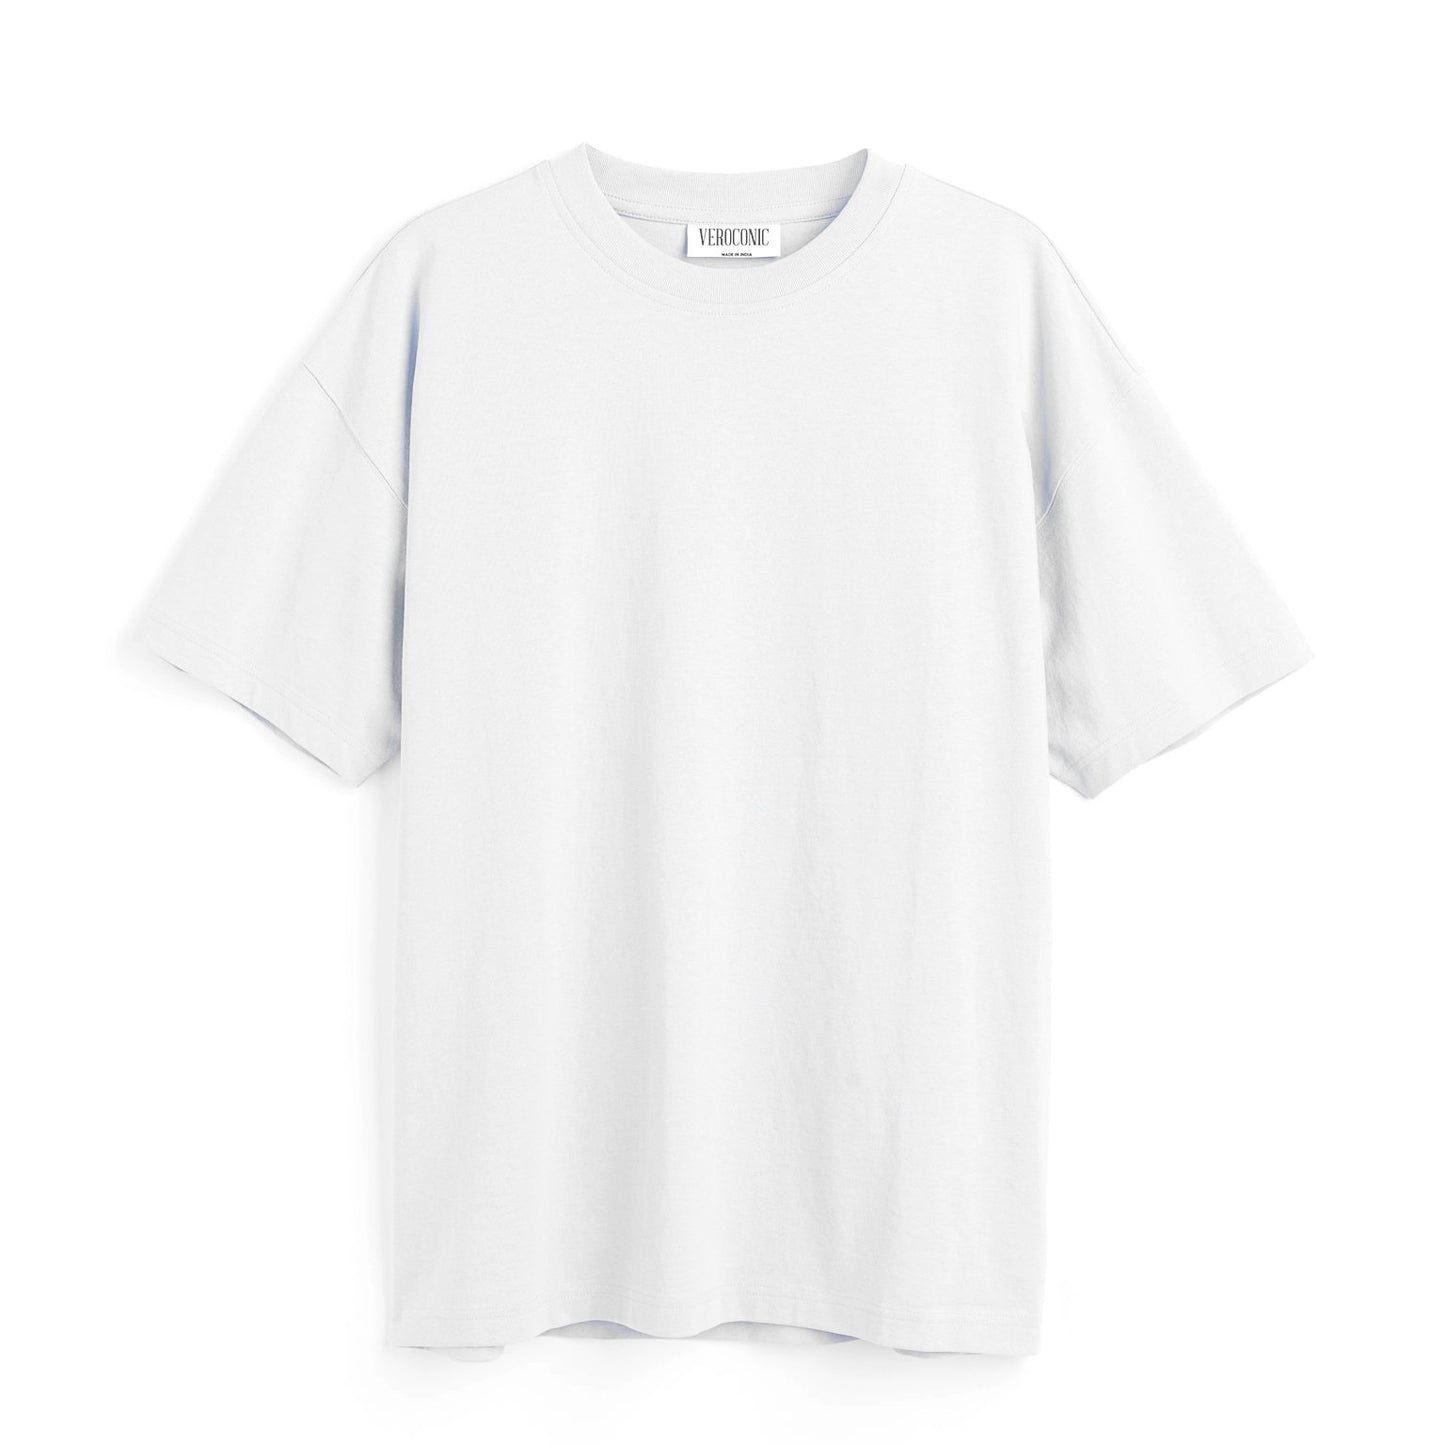 Plain Oversized White Cotton T-shirt